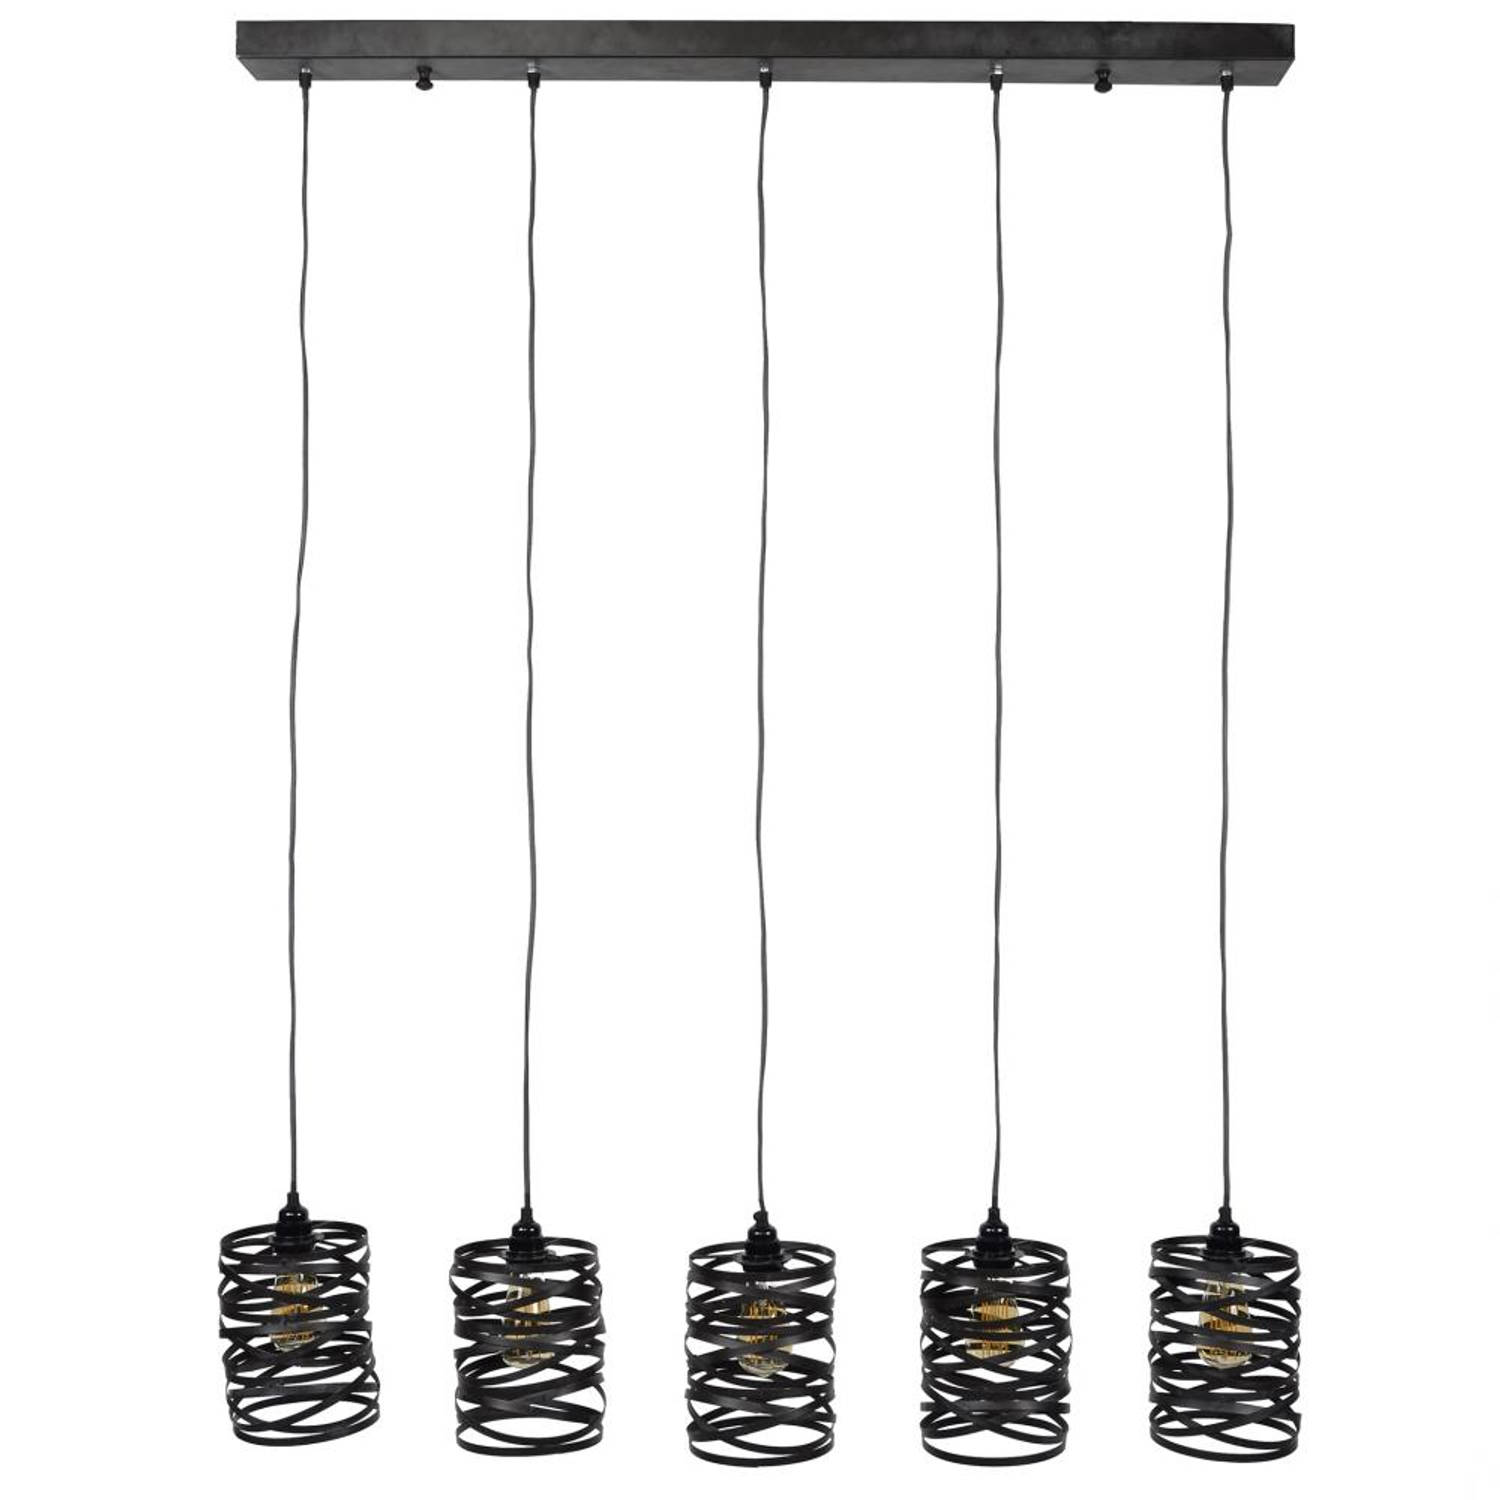 Giga Meubel Gm Hanglamp 5-lichts - Metaal - Cilinder - Lamp Spindle